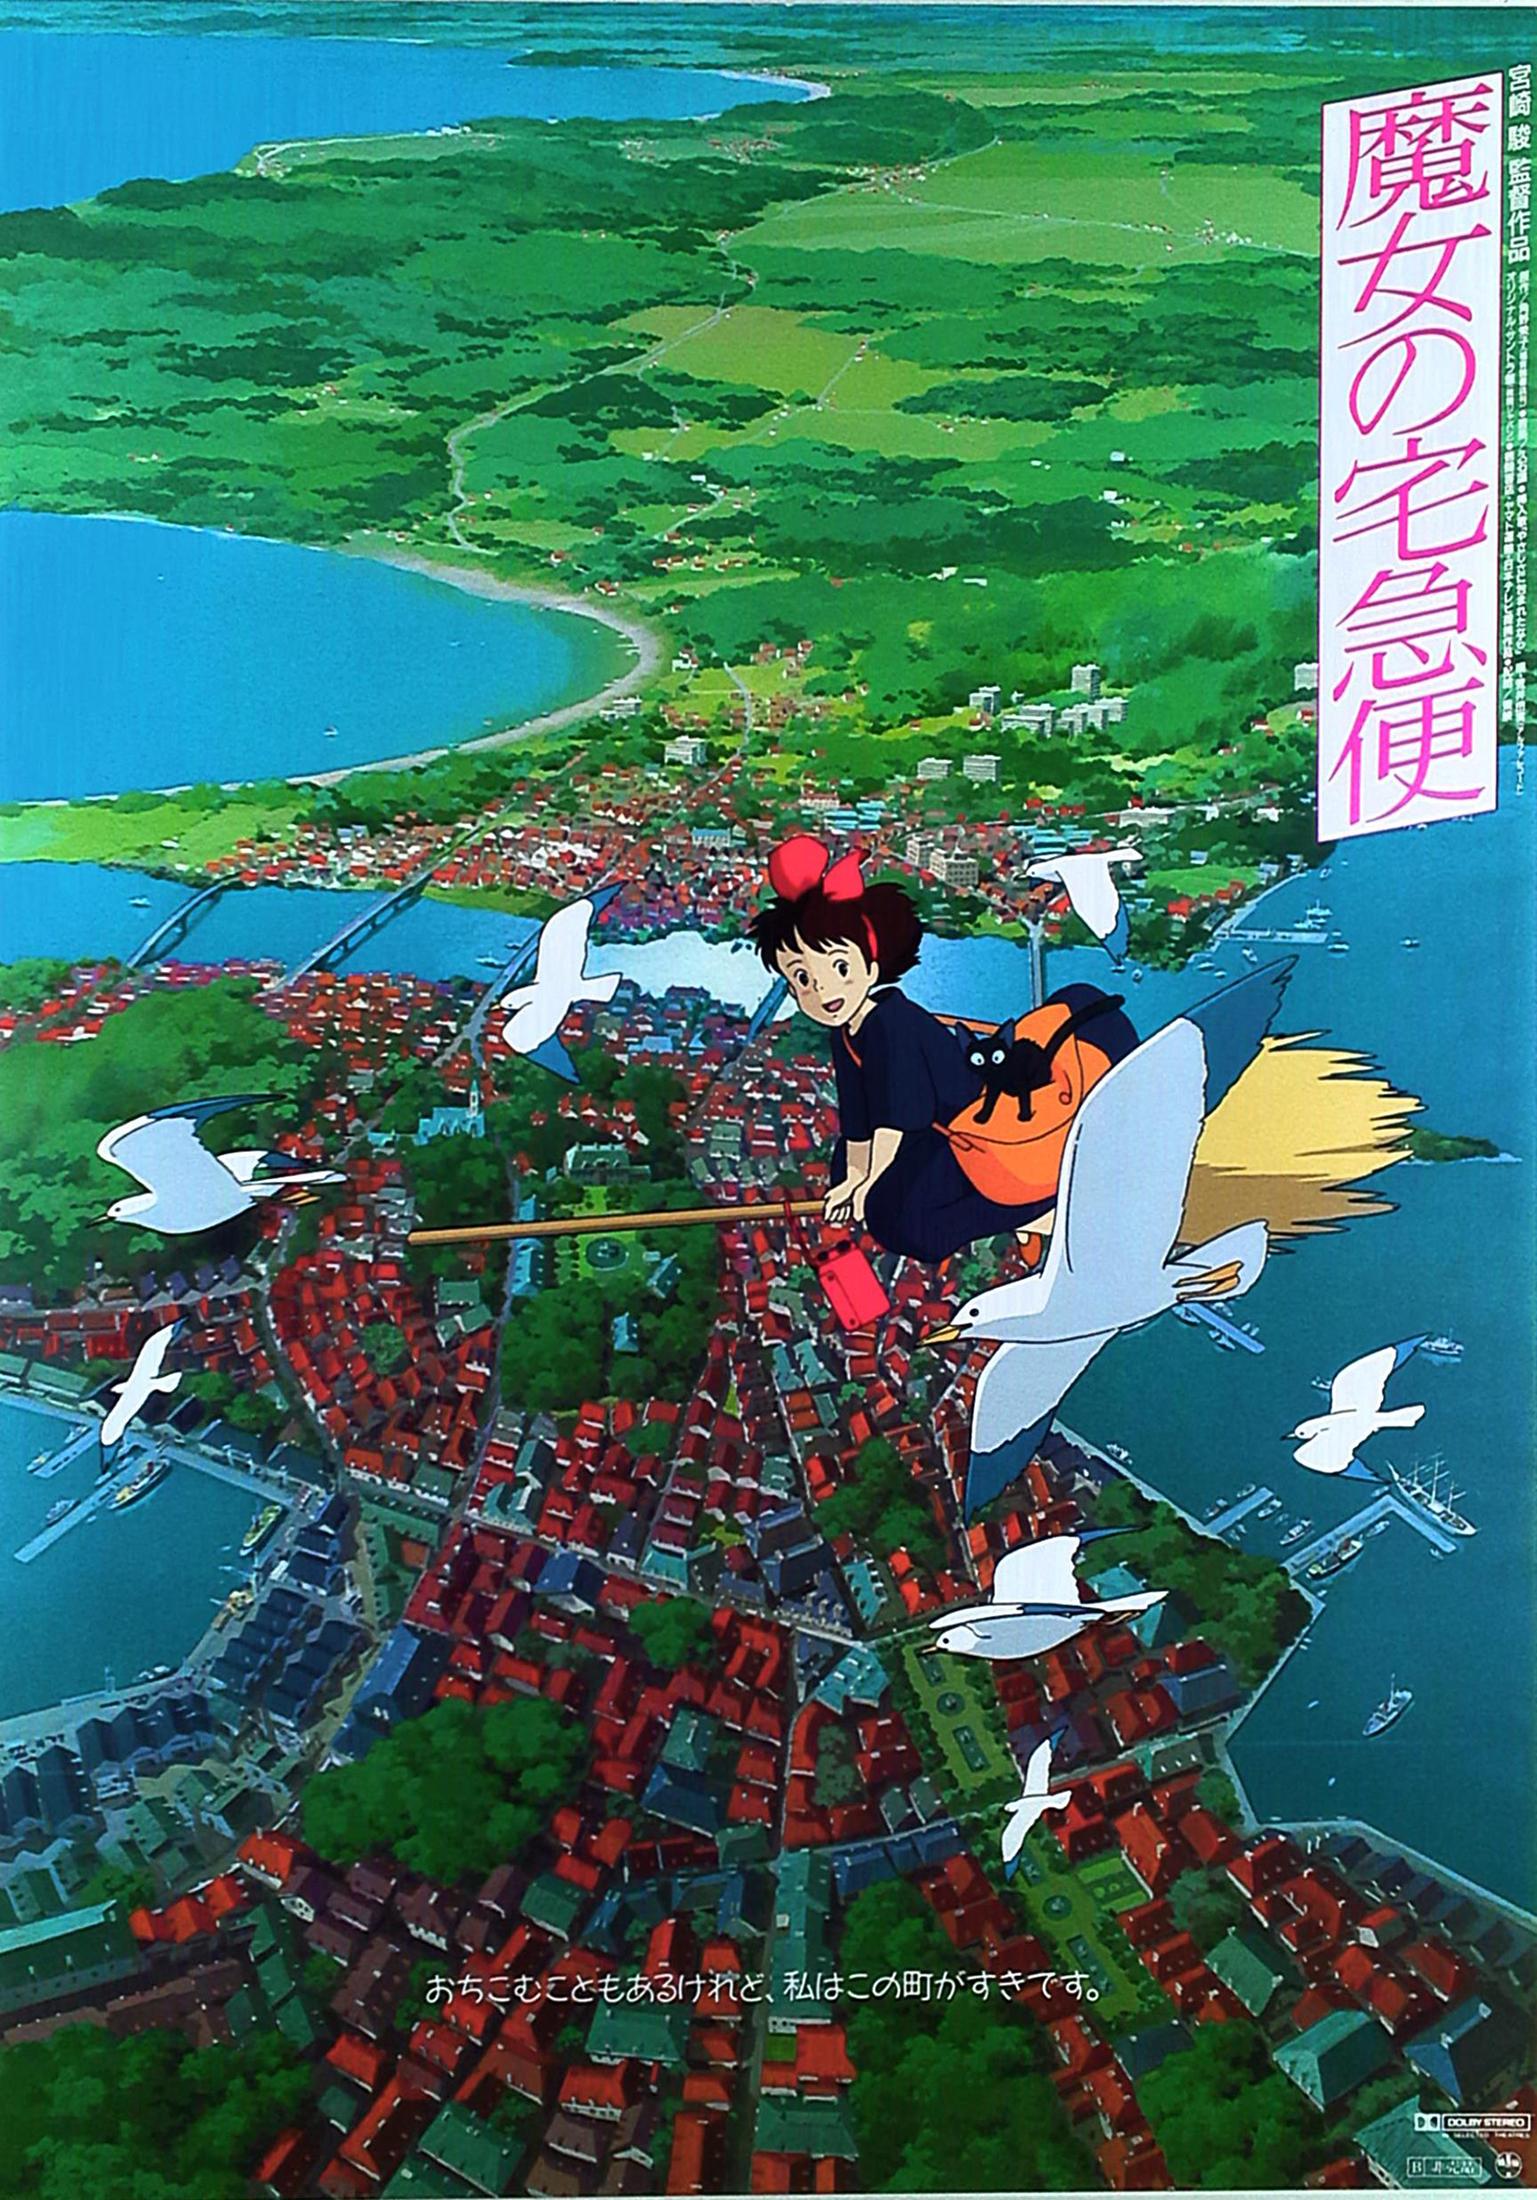 Unknown Print - Kiki's Delivery Service Original Large Vintage Poster, Miyazaki, Studio Ghibli